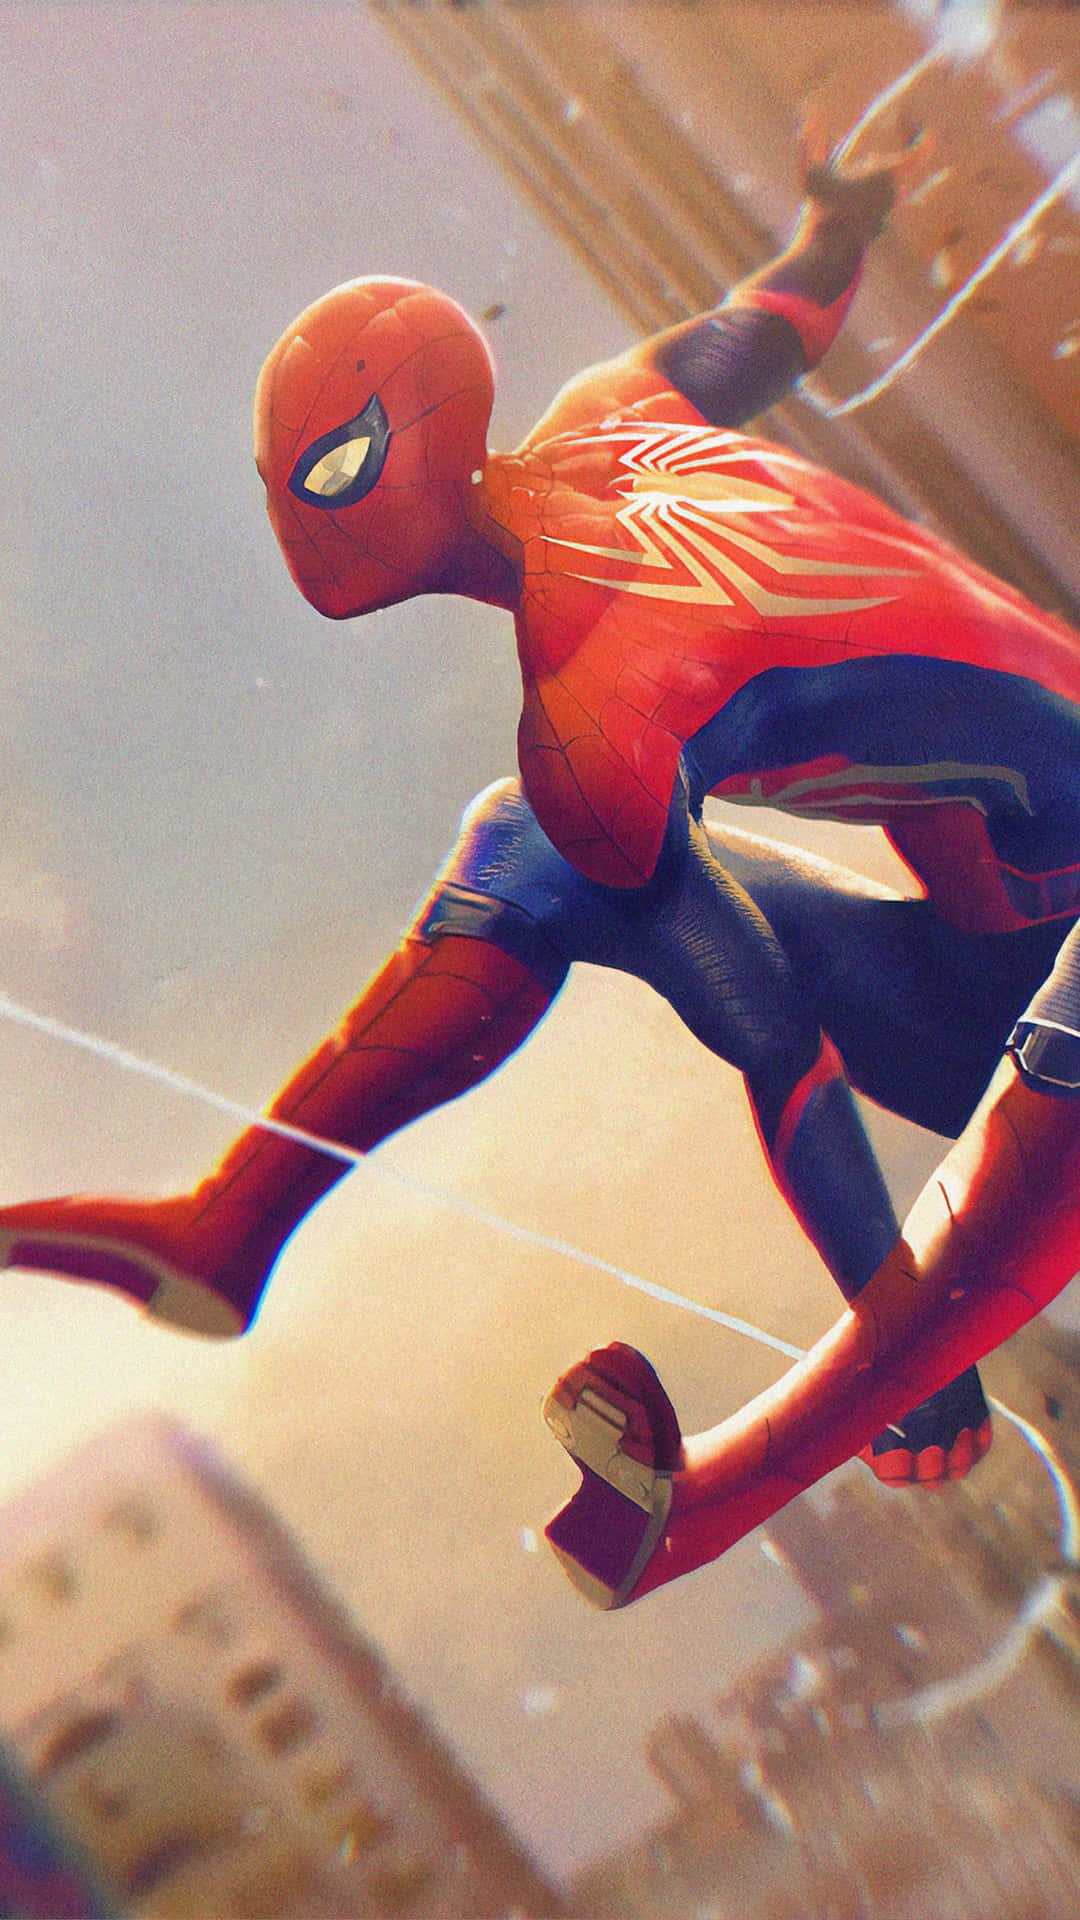 Swinging through the city - Friendly Neighborhood Spider-Man Wallpaper